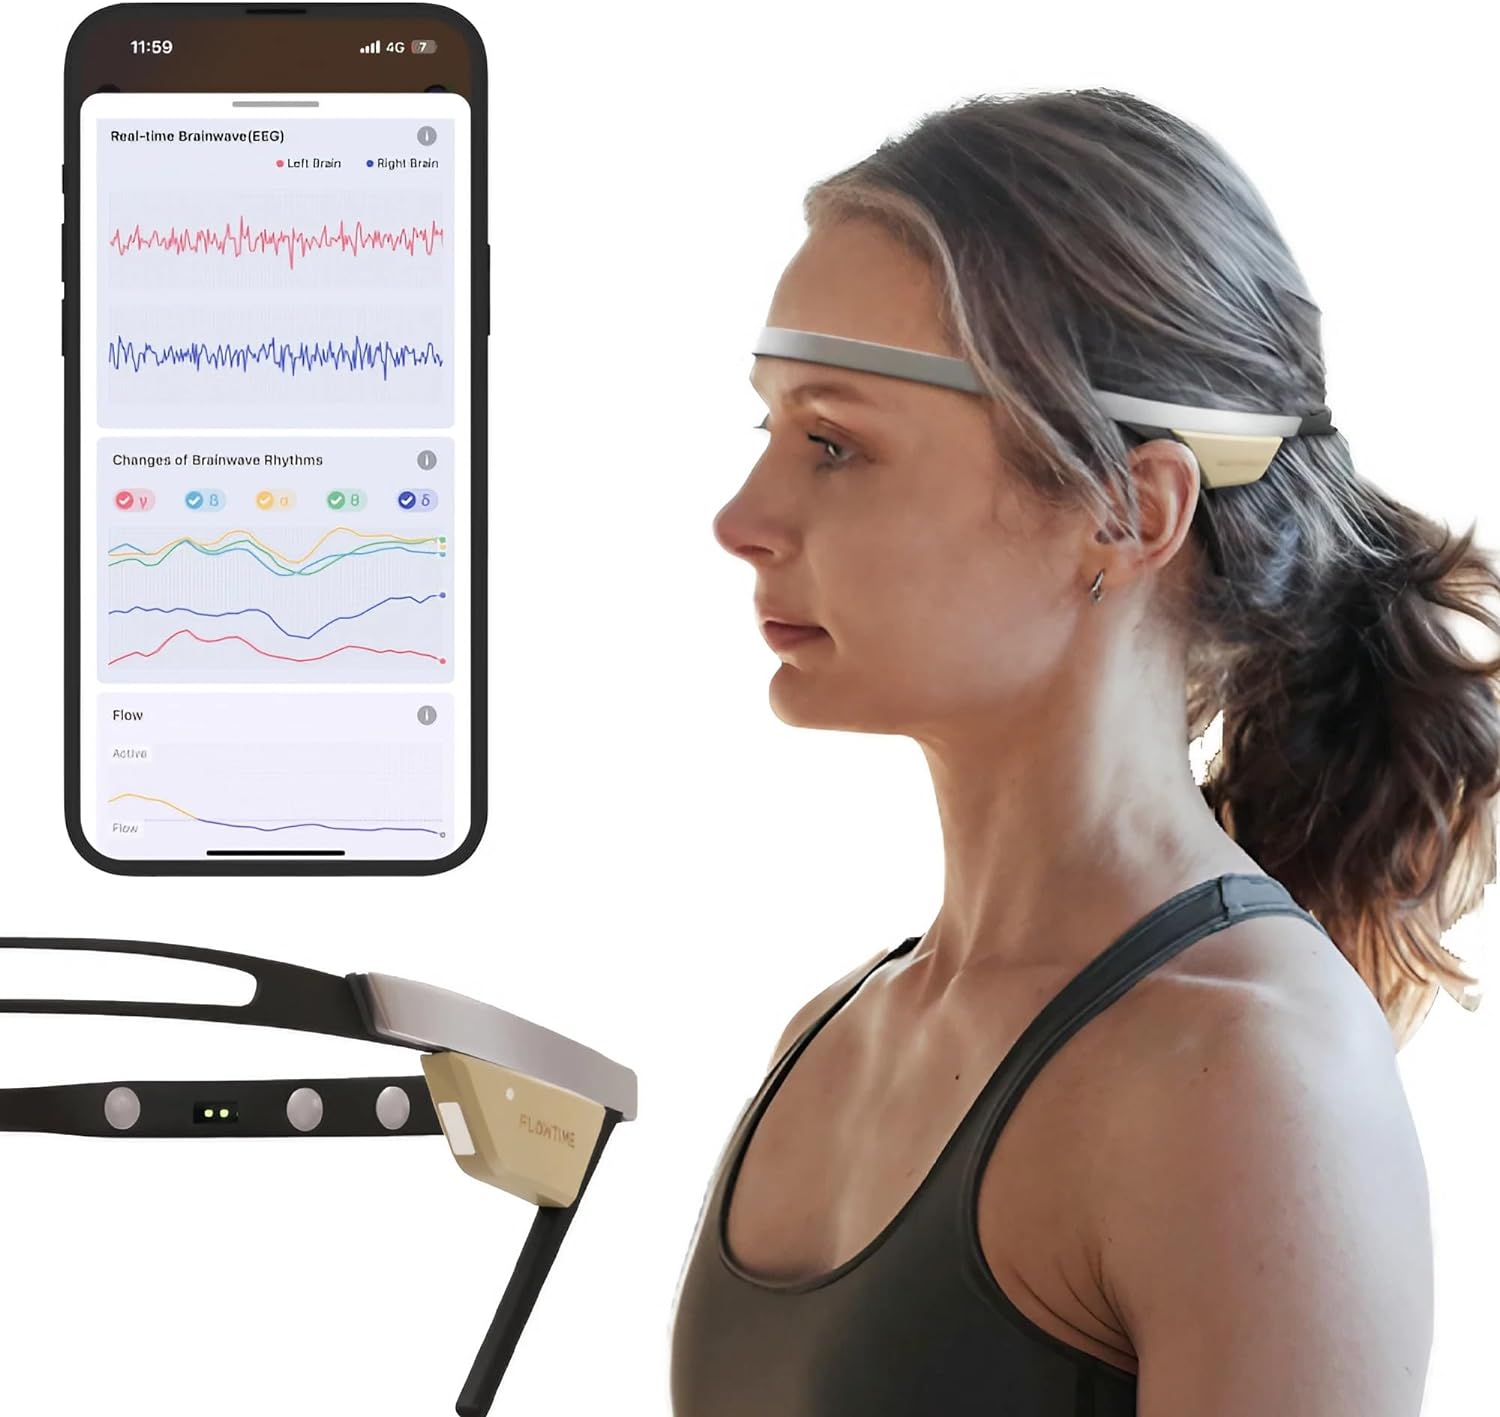 Biosensing Meditation Headband - Brain Tracker for Neurofeedback Training at Home - Heart Rate, Breath, HRV, Stress, Flow, Alpha, Theta, Beta, Gamma Wave Breakdowns